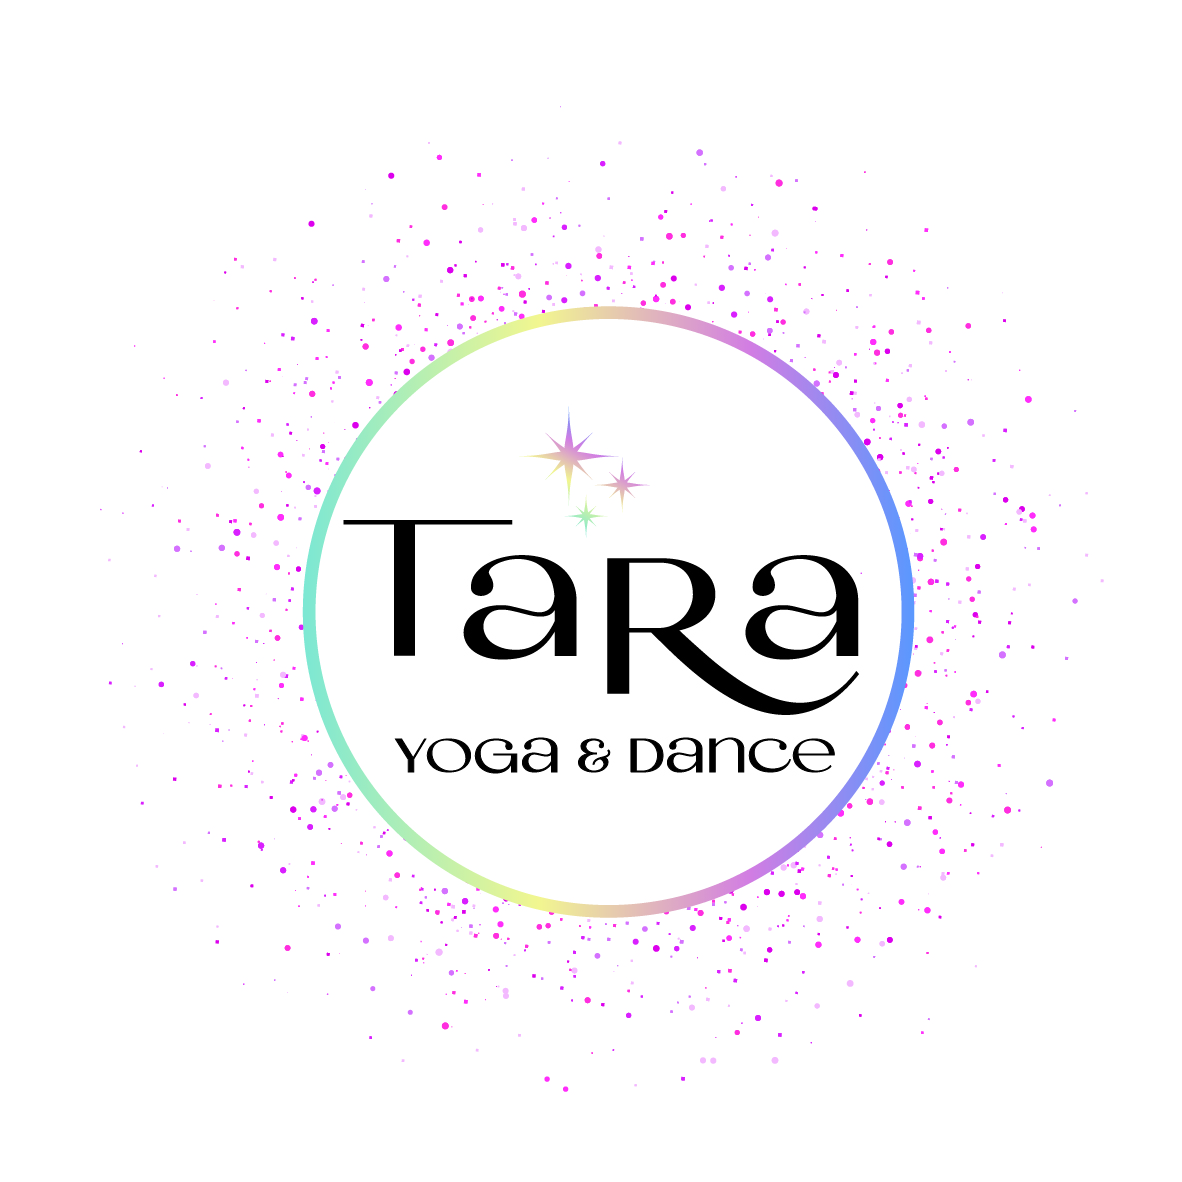 tara yogadance logo white